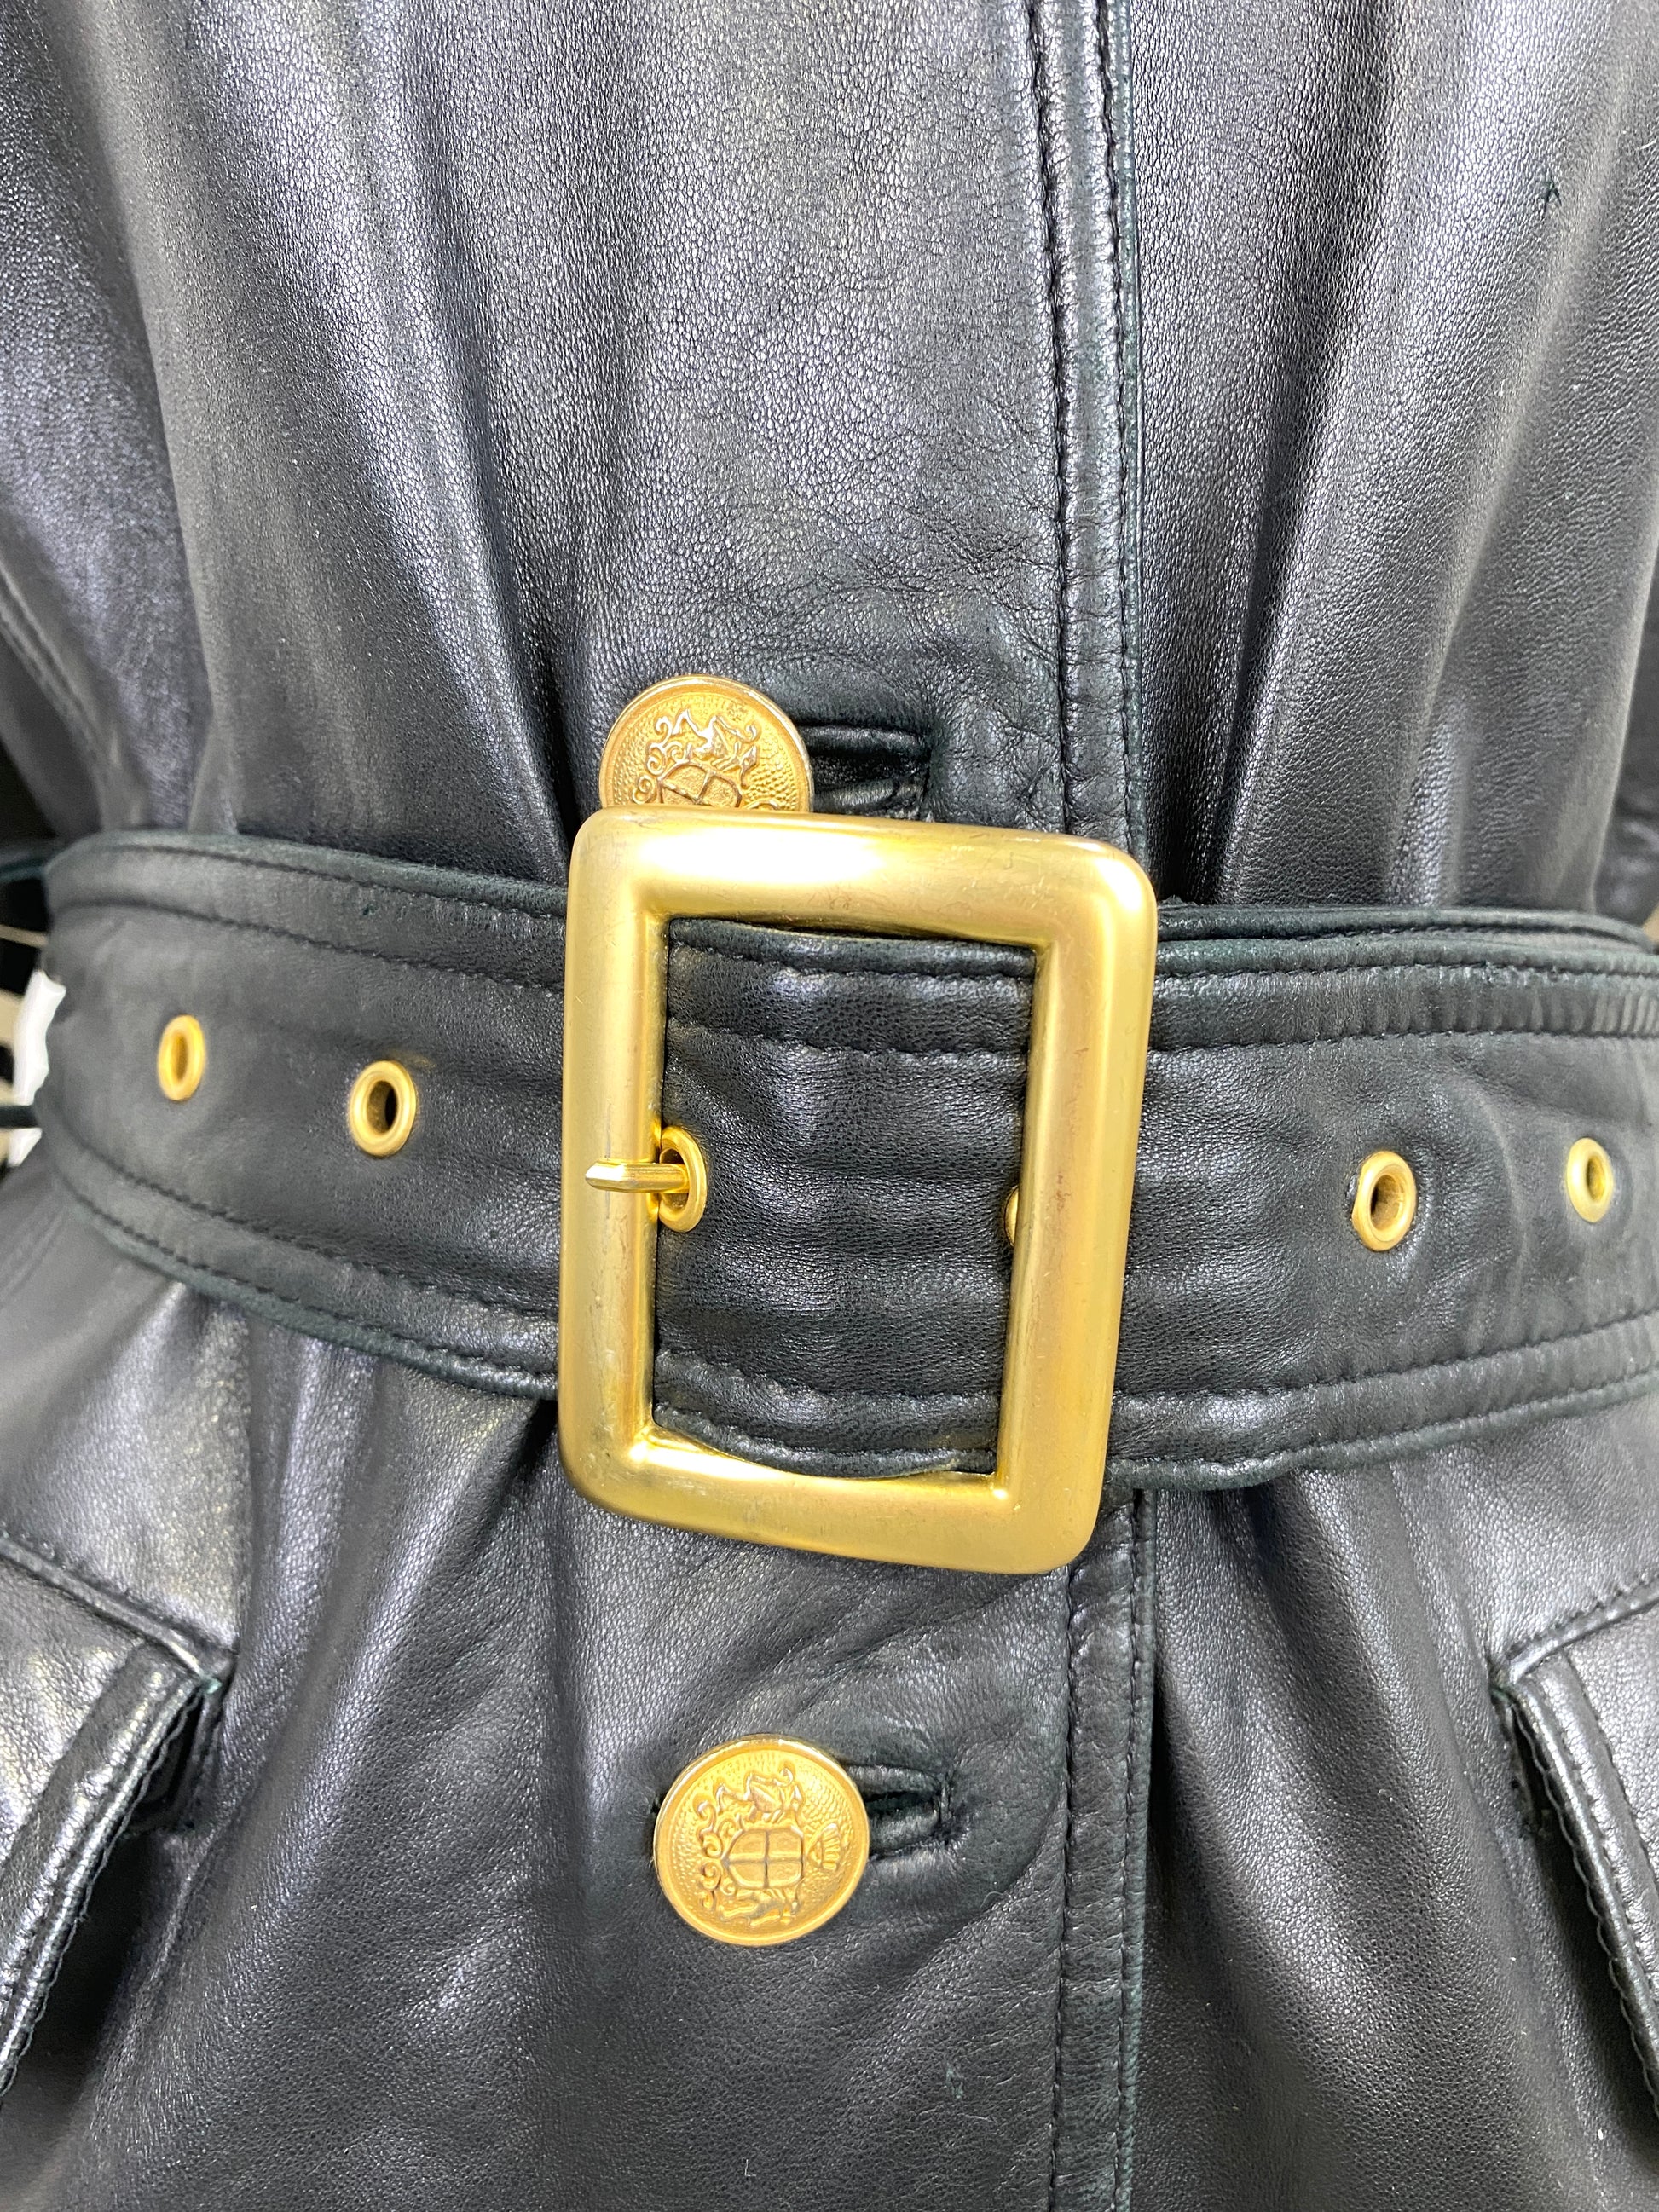 Vintage 1990s Danier Black Leather Sleeveless Jacket/ Vest, Small